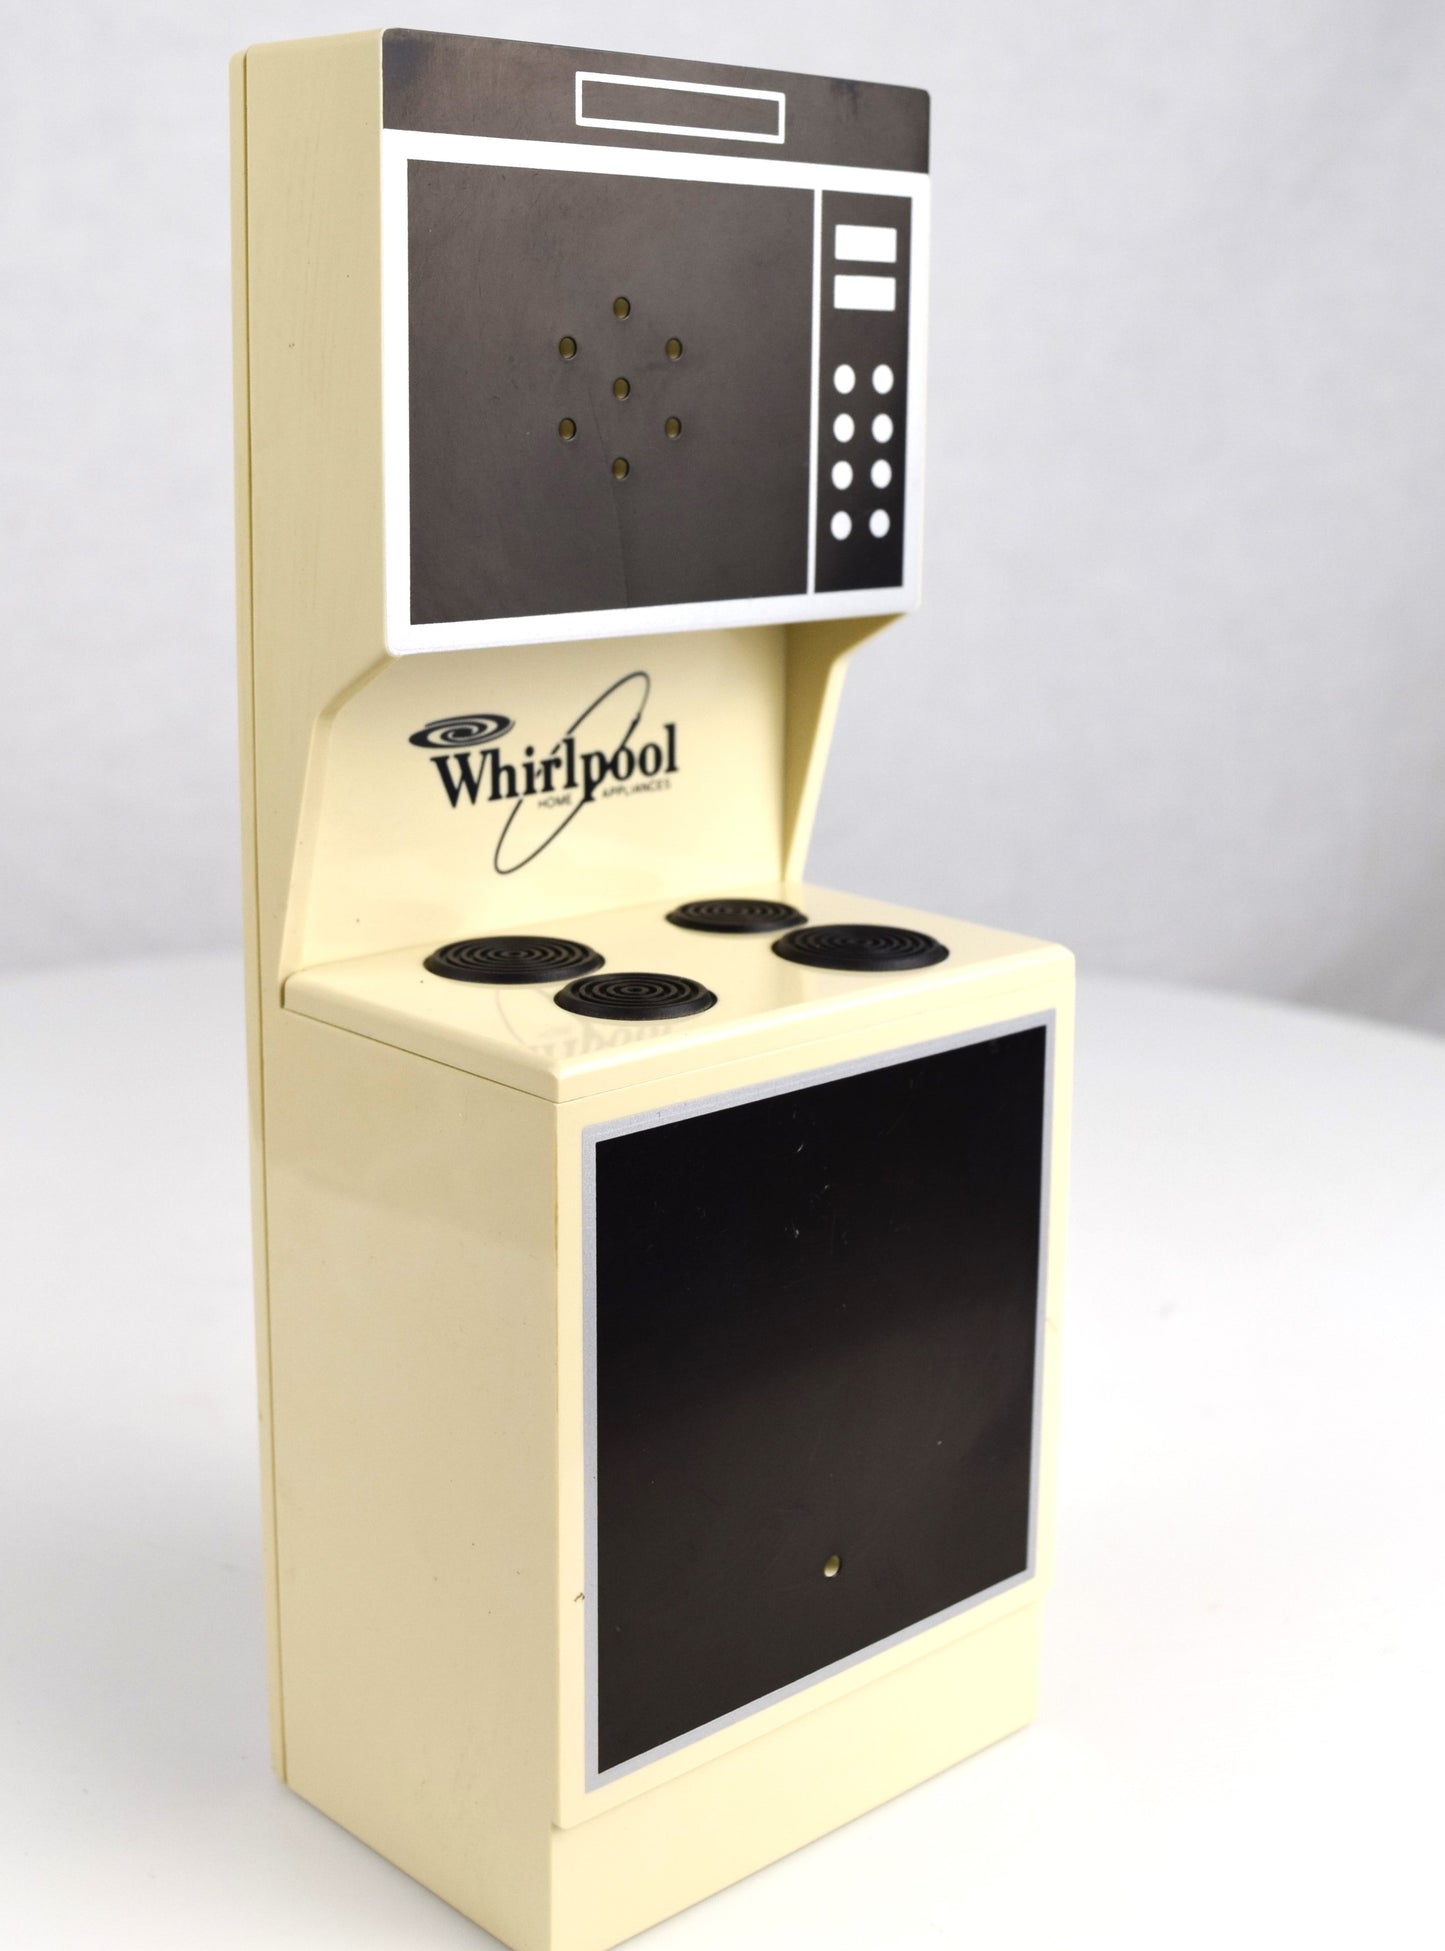 Whirlpool Range Promotional Telephone